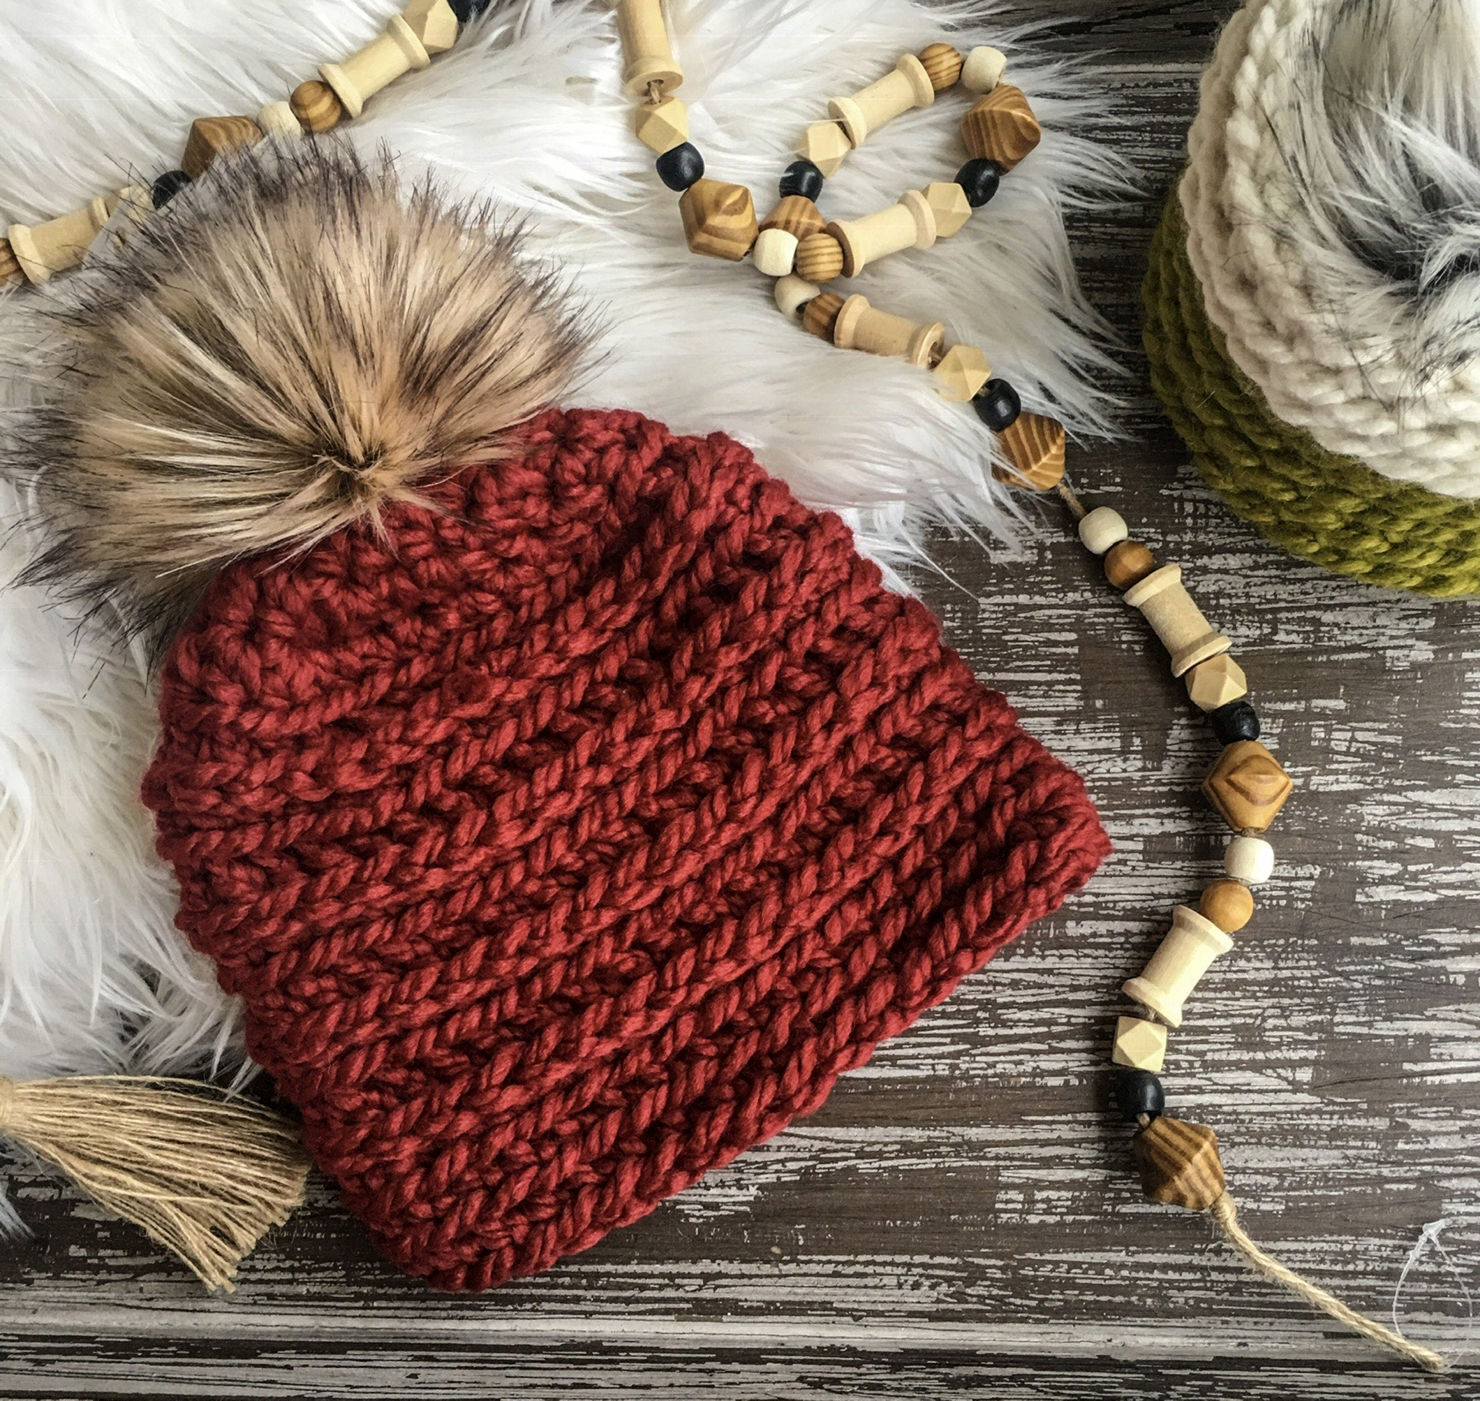 Knitting and crocheting: Not your grandma's hobby anymore